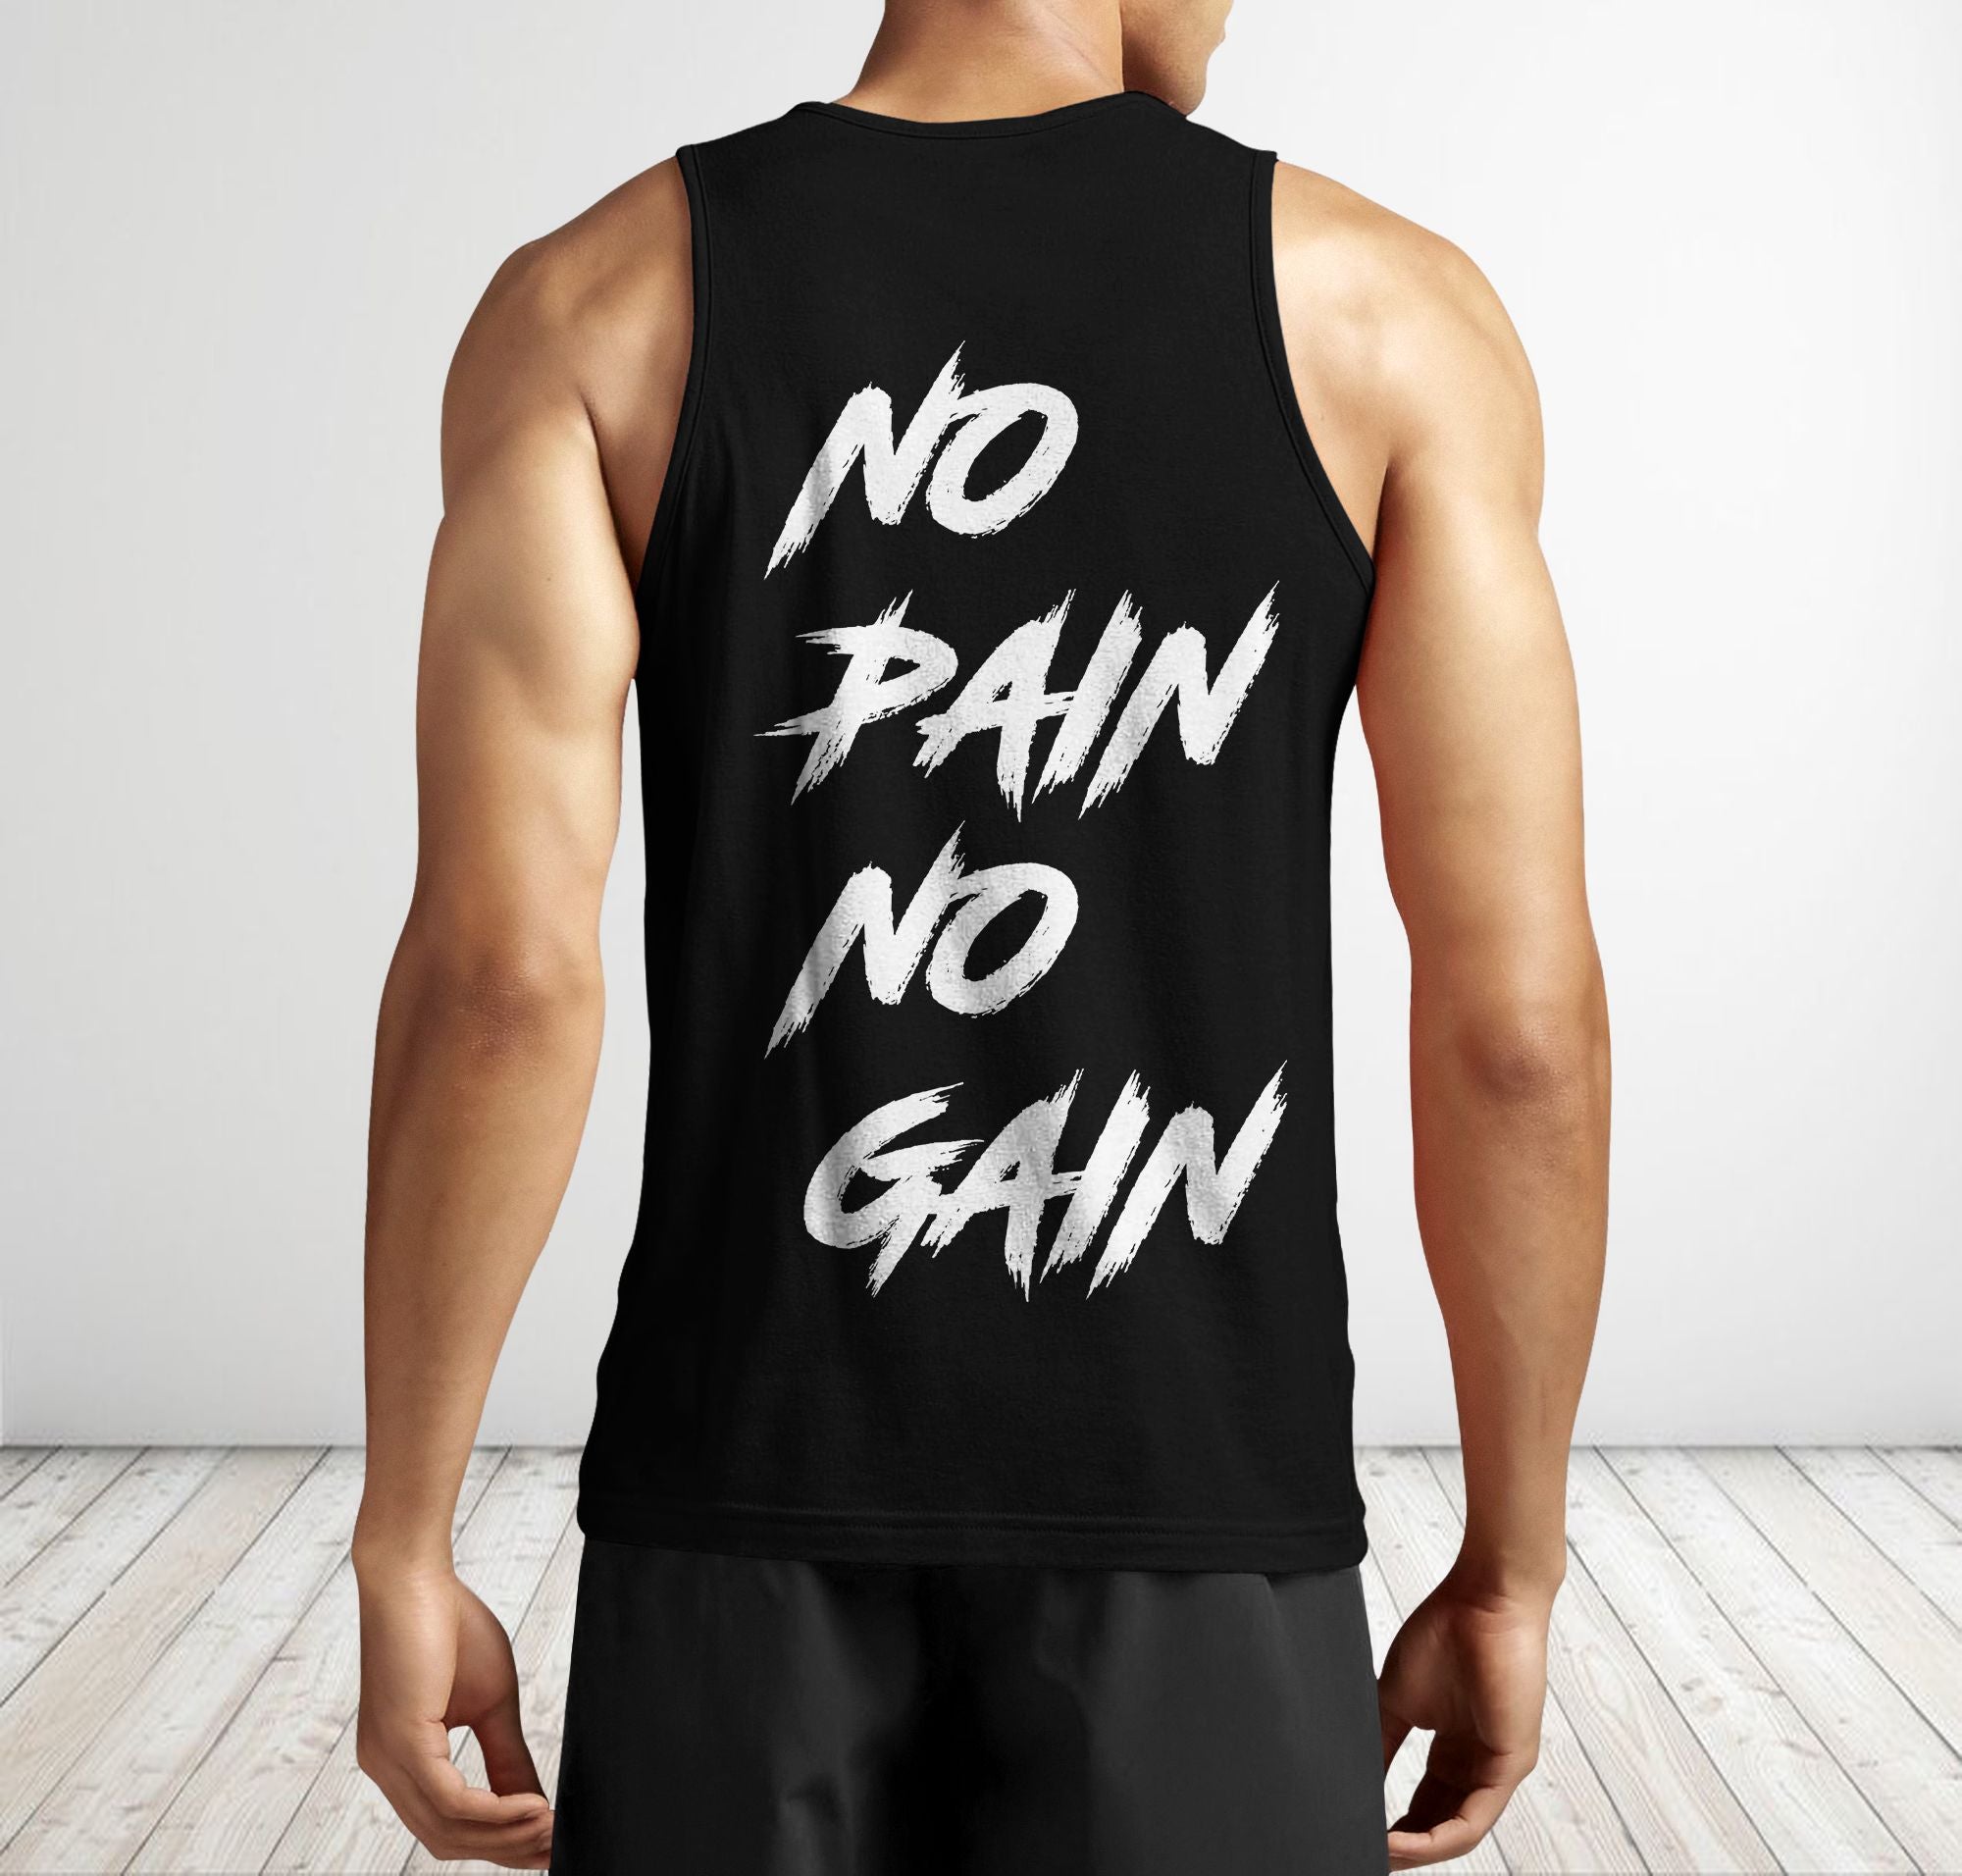 Men Gym Tank Tops Motivational Shirts Beast Mode Activated